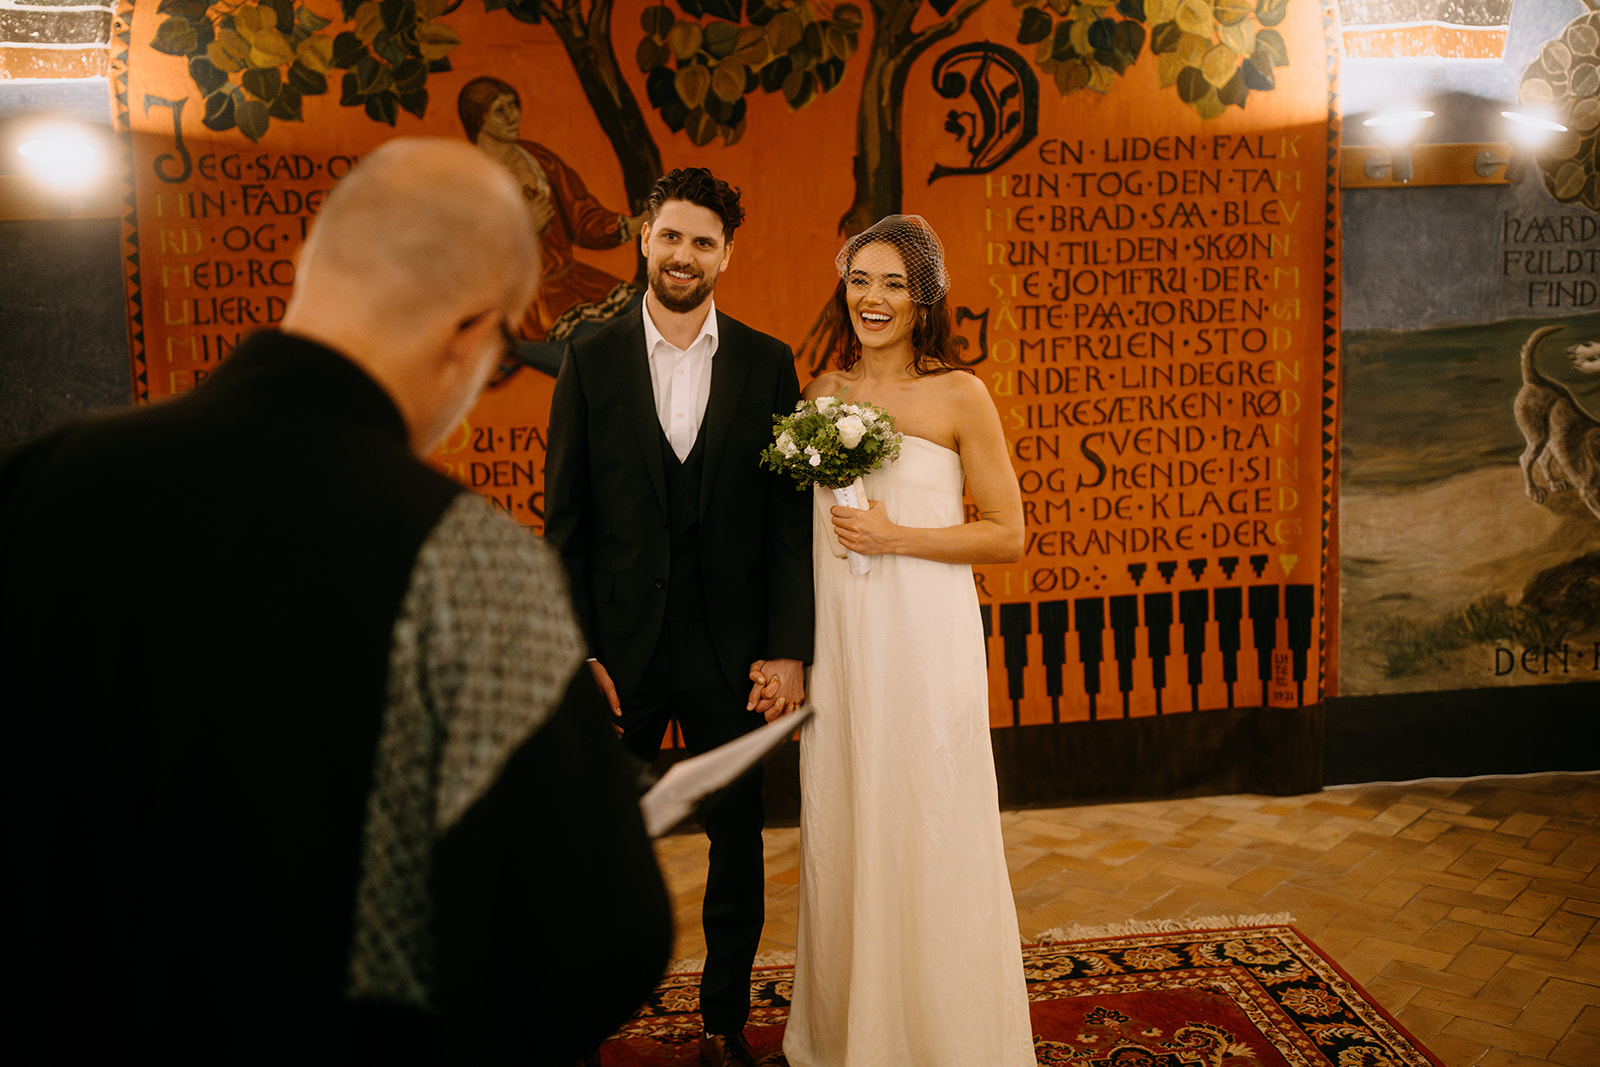 Express wedding: Getting Married in Denmark